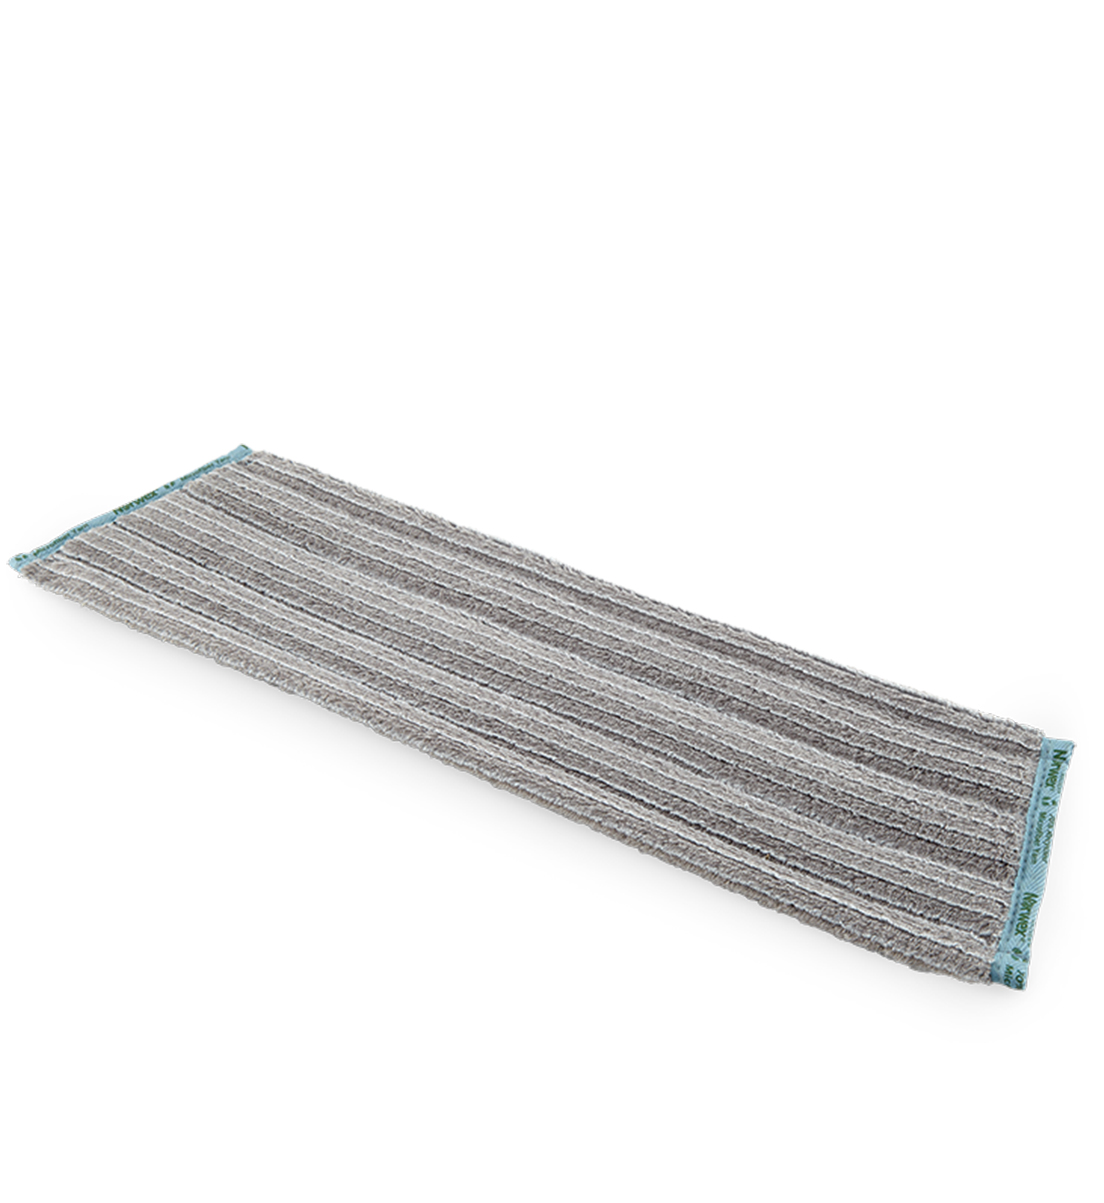 Wet Mop Pad, graphite with blue trim